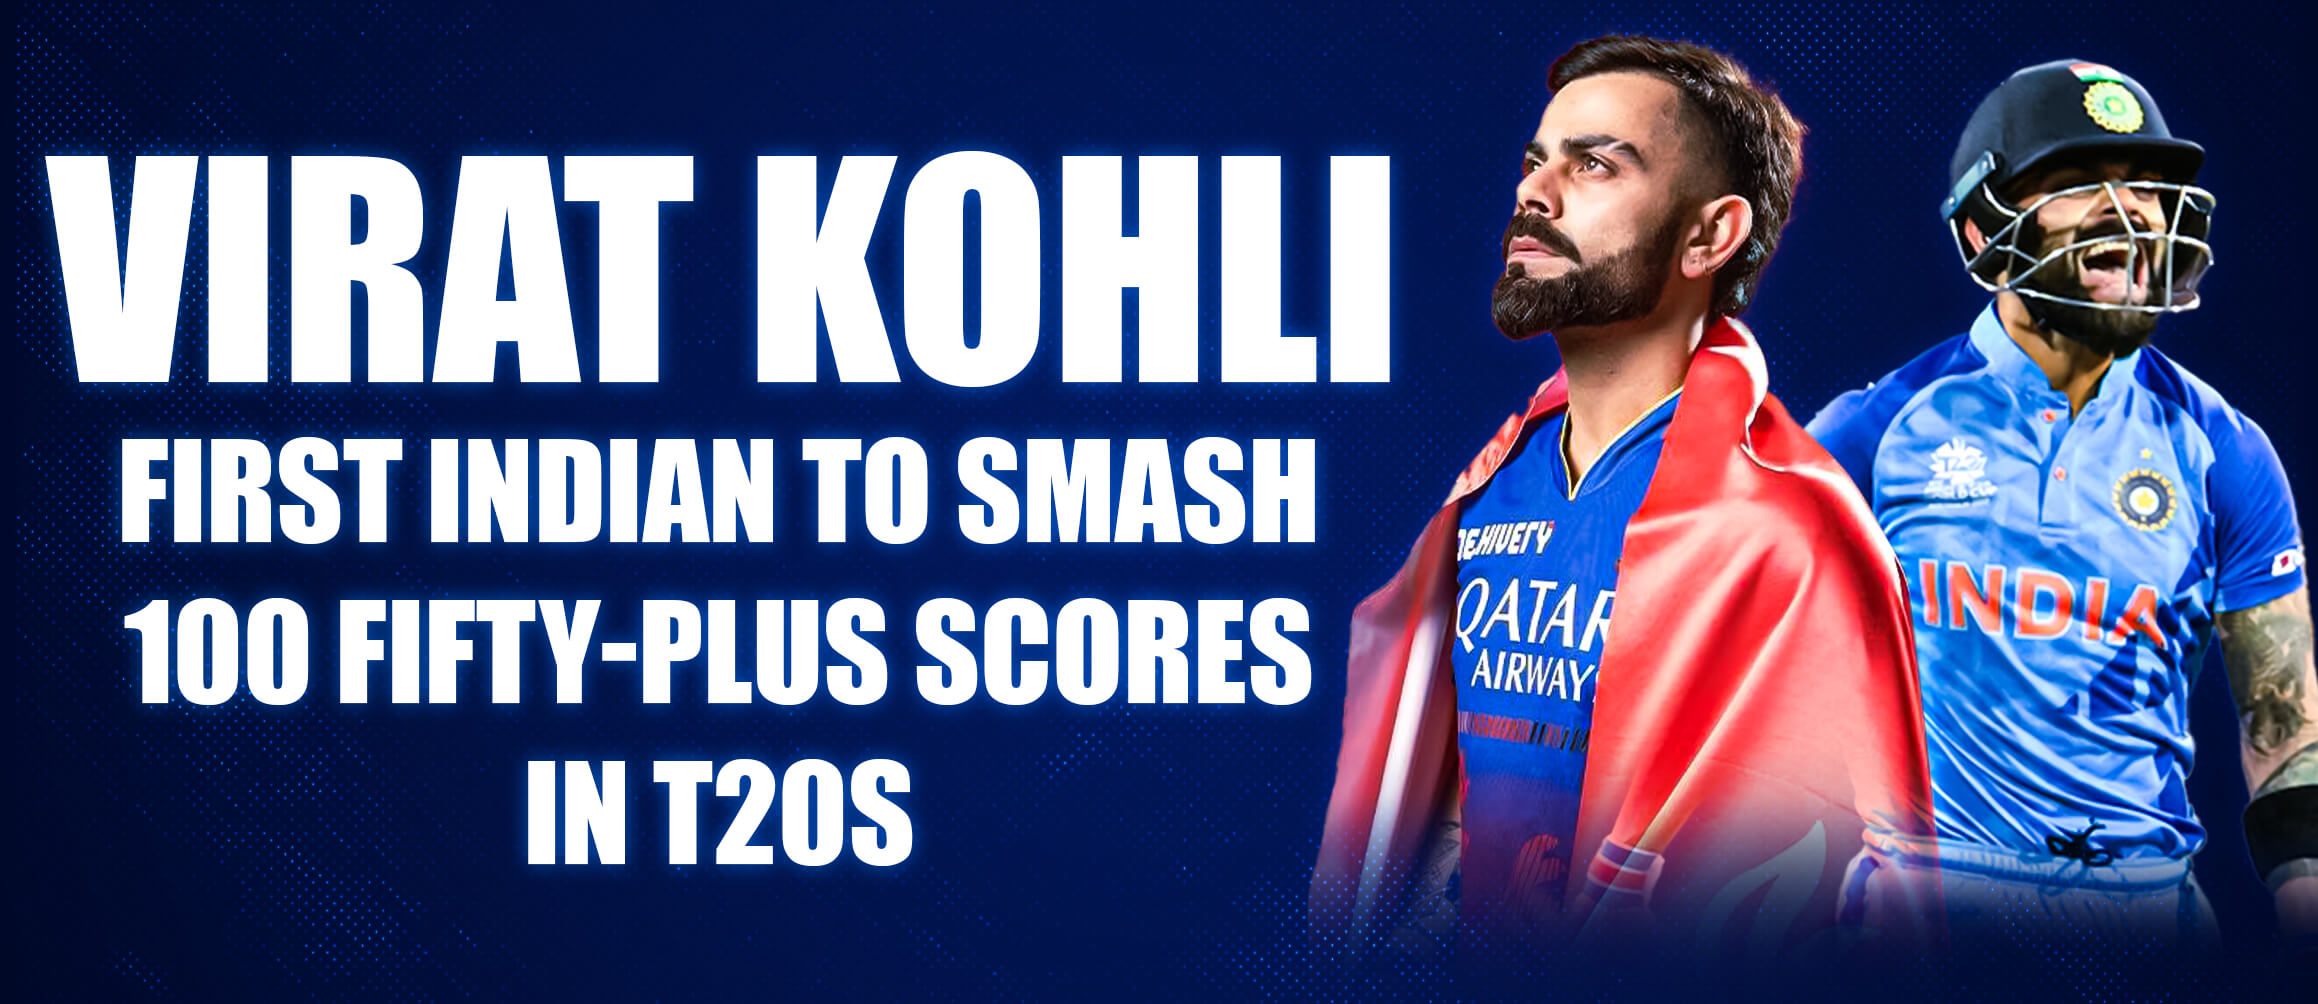 Virat Kohli – First Indian to Smash 100 Fifty-Plus Scores in T20s!